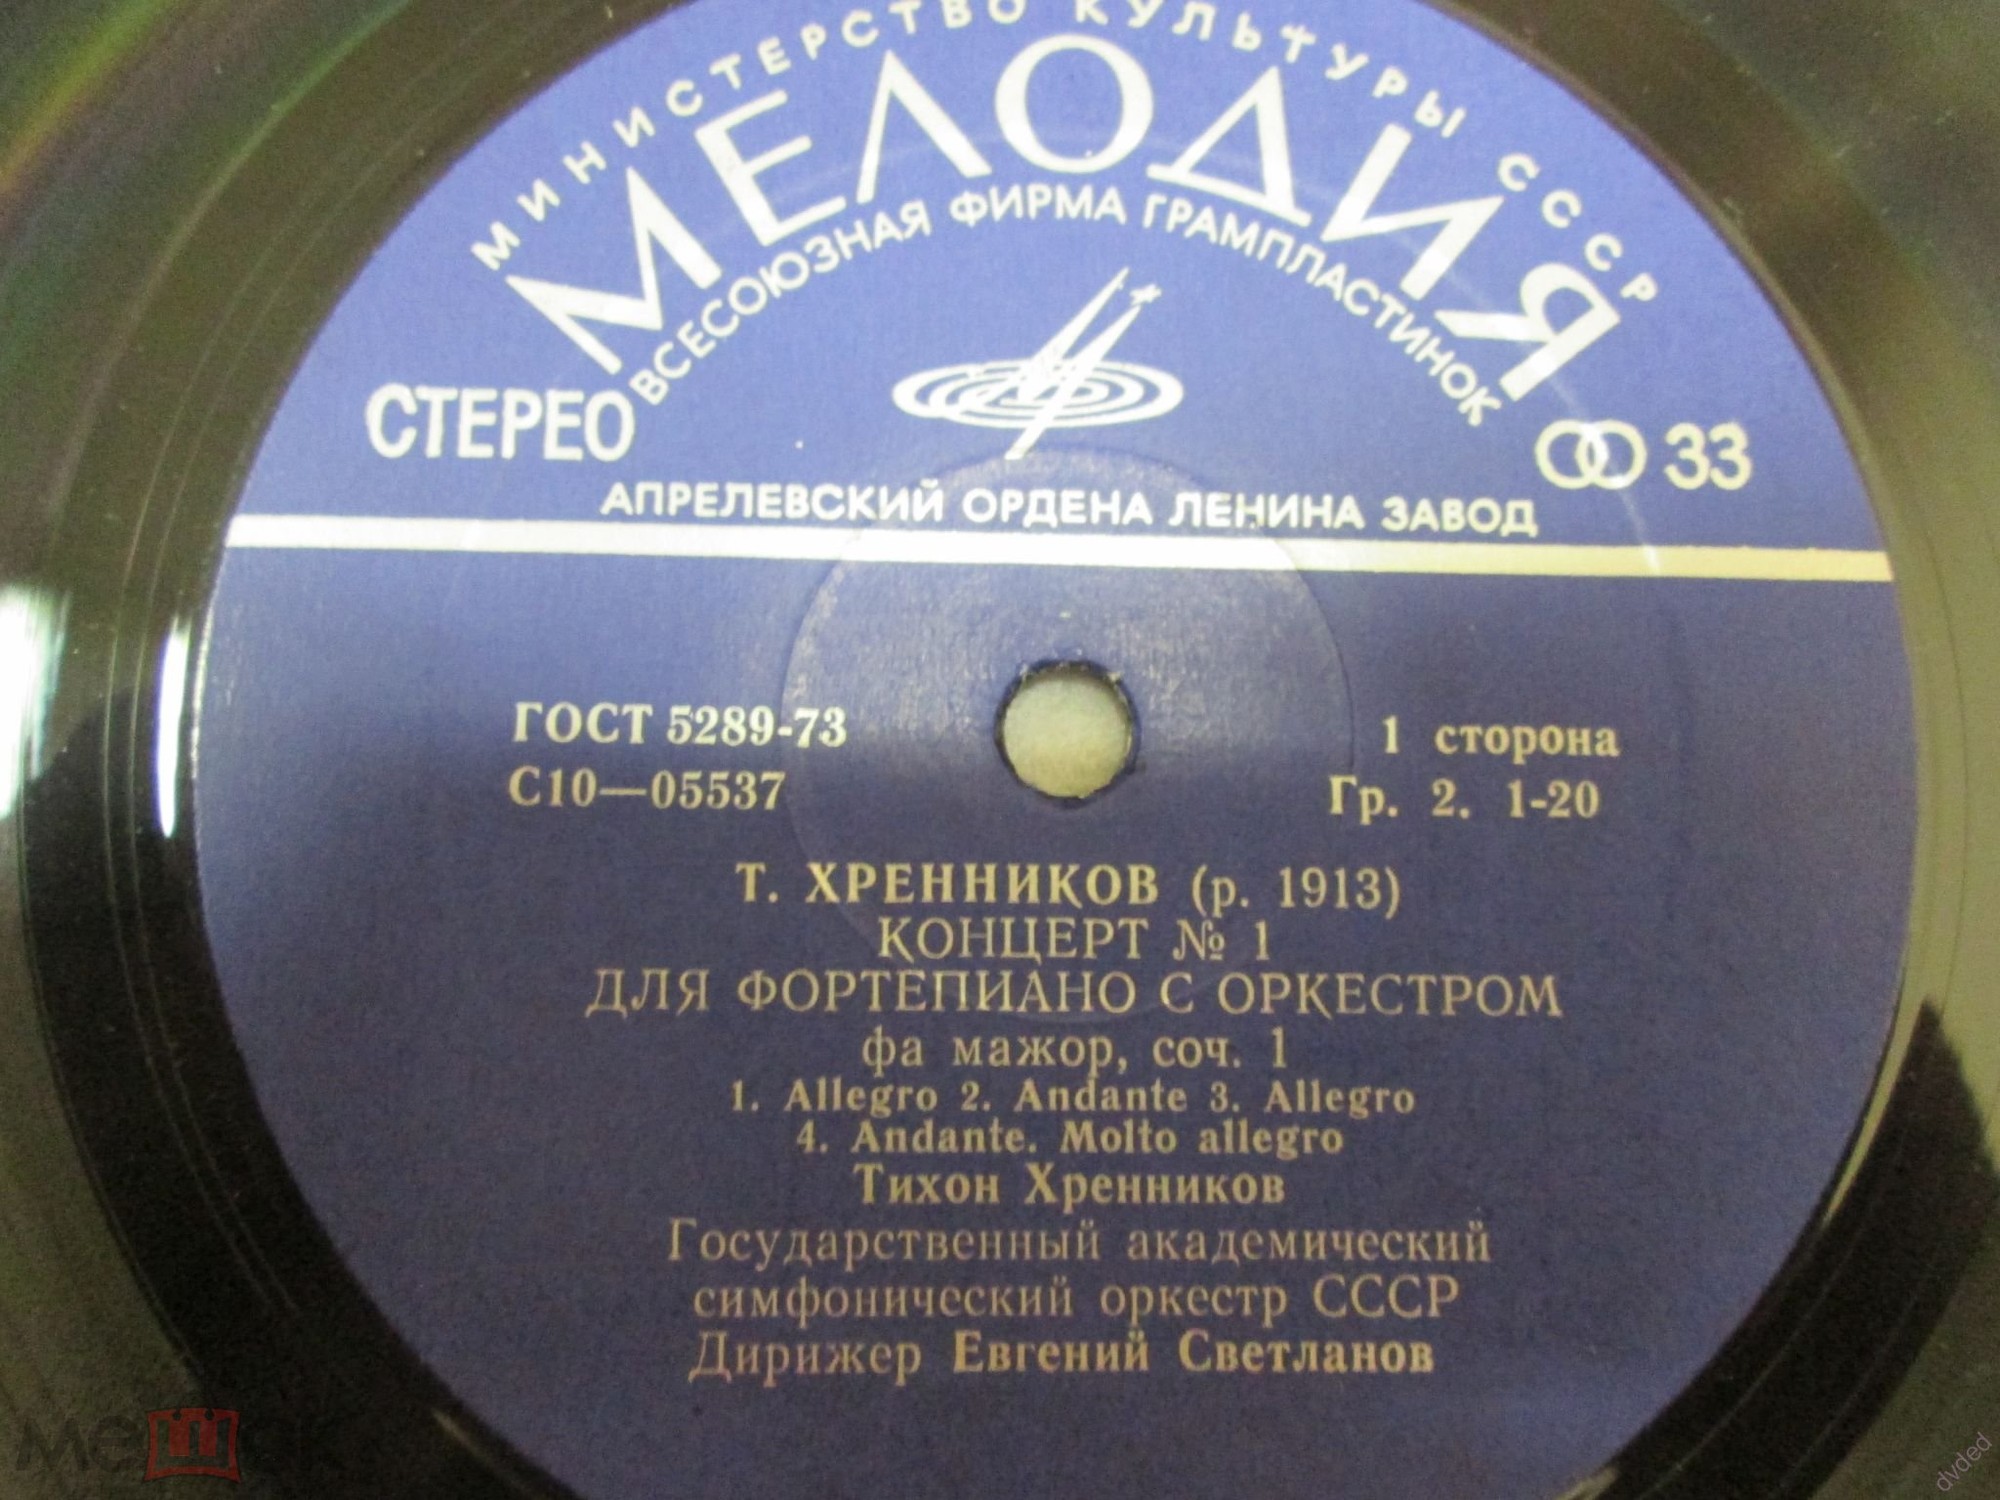 Т. ХРЕННИКОВ (р. 1913). Концерт №1. Симфония №1.